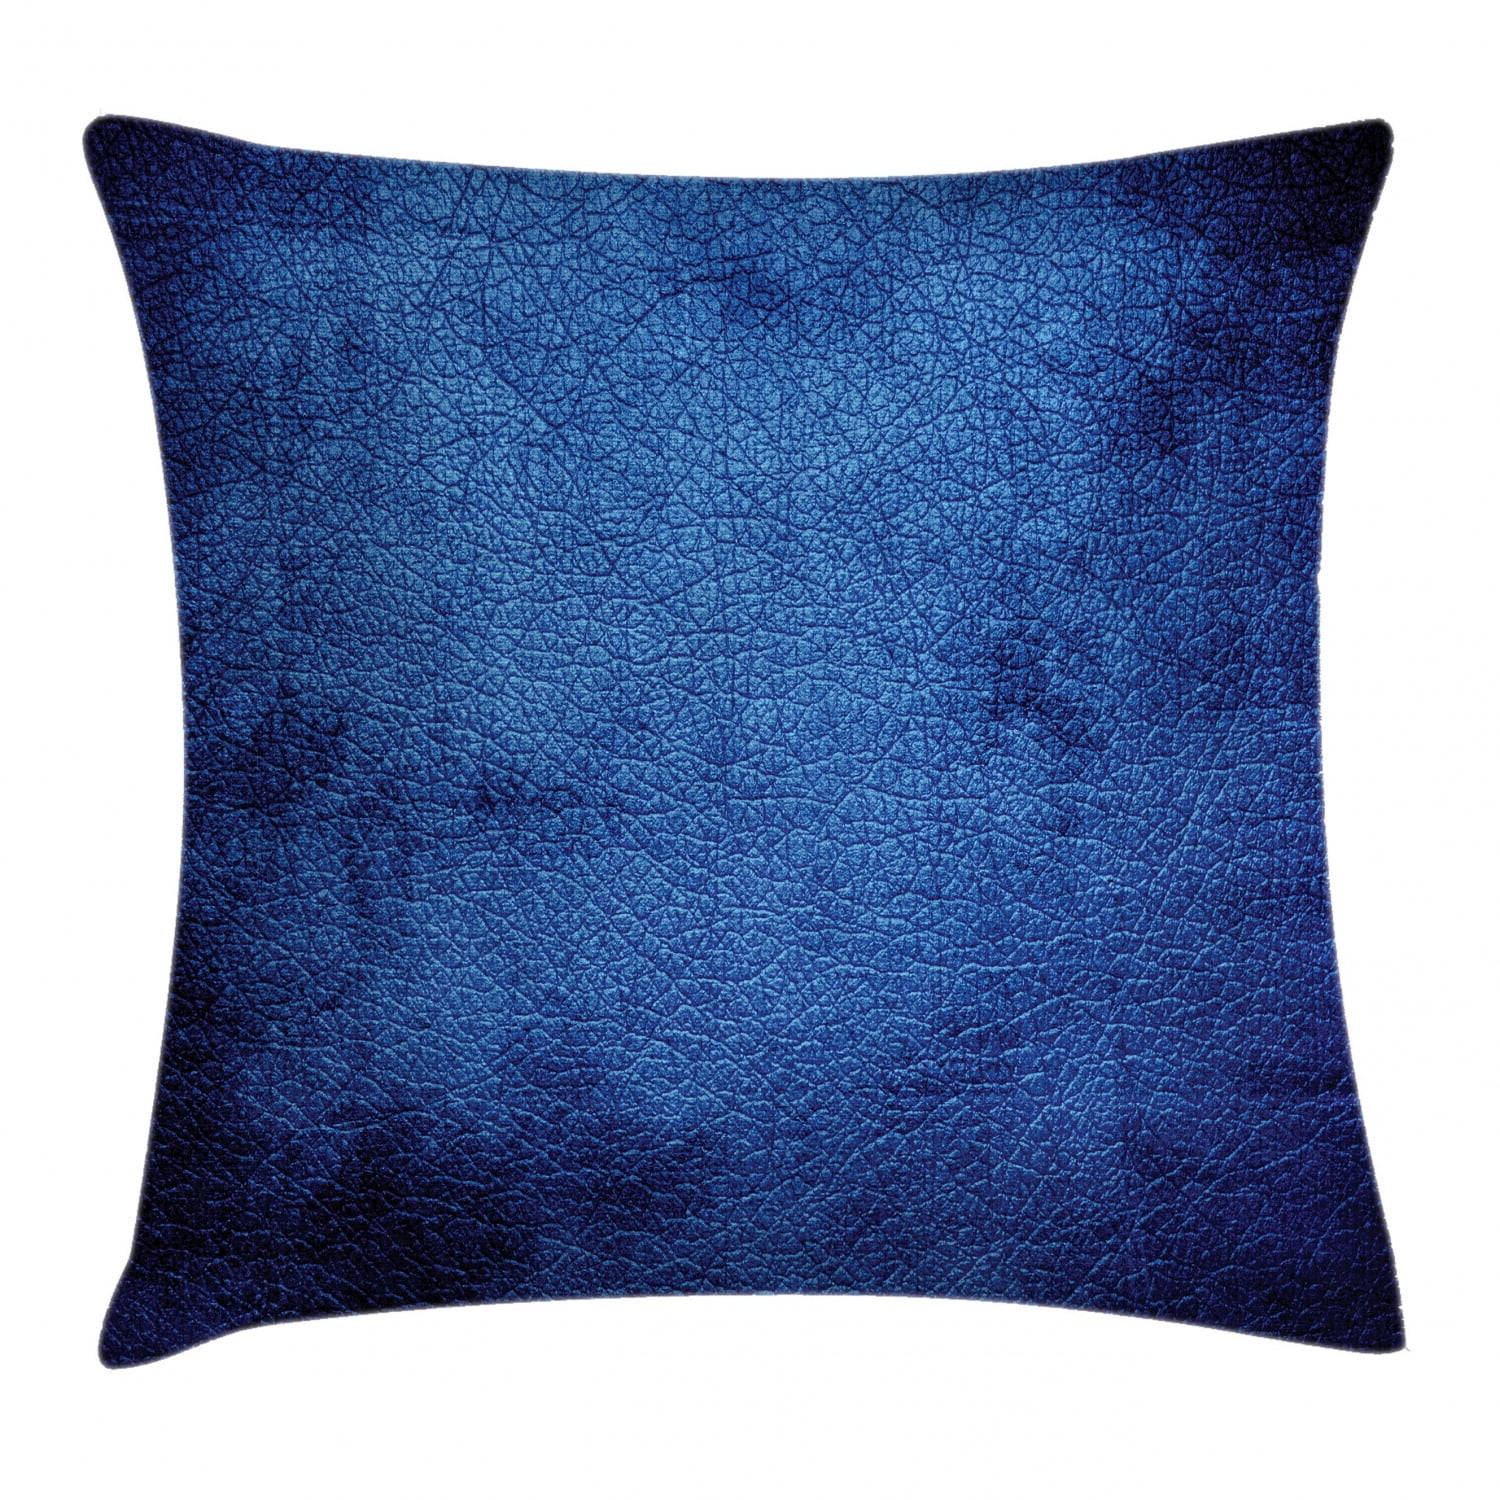 Navy Blue Decor Throw Pillow Cushion Cover, Martian Alien Skin Like ...